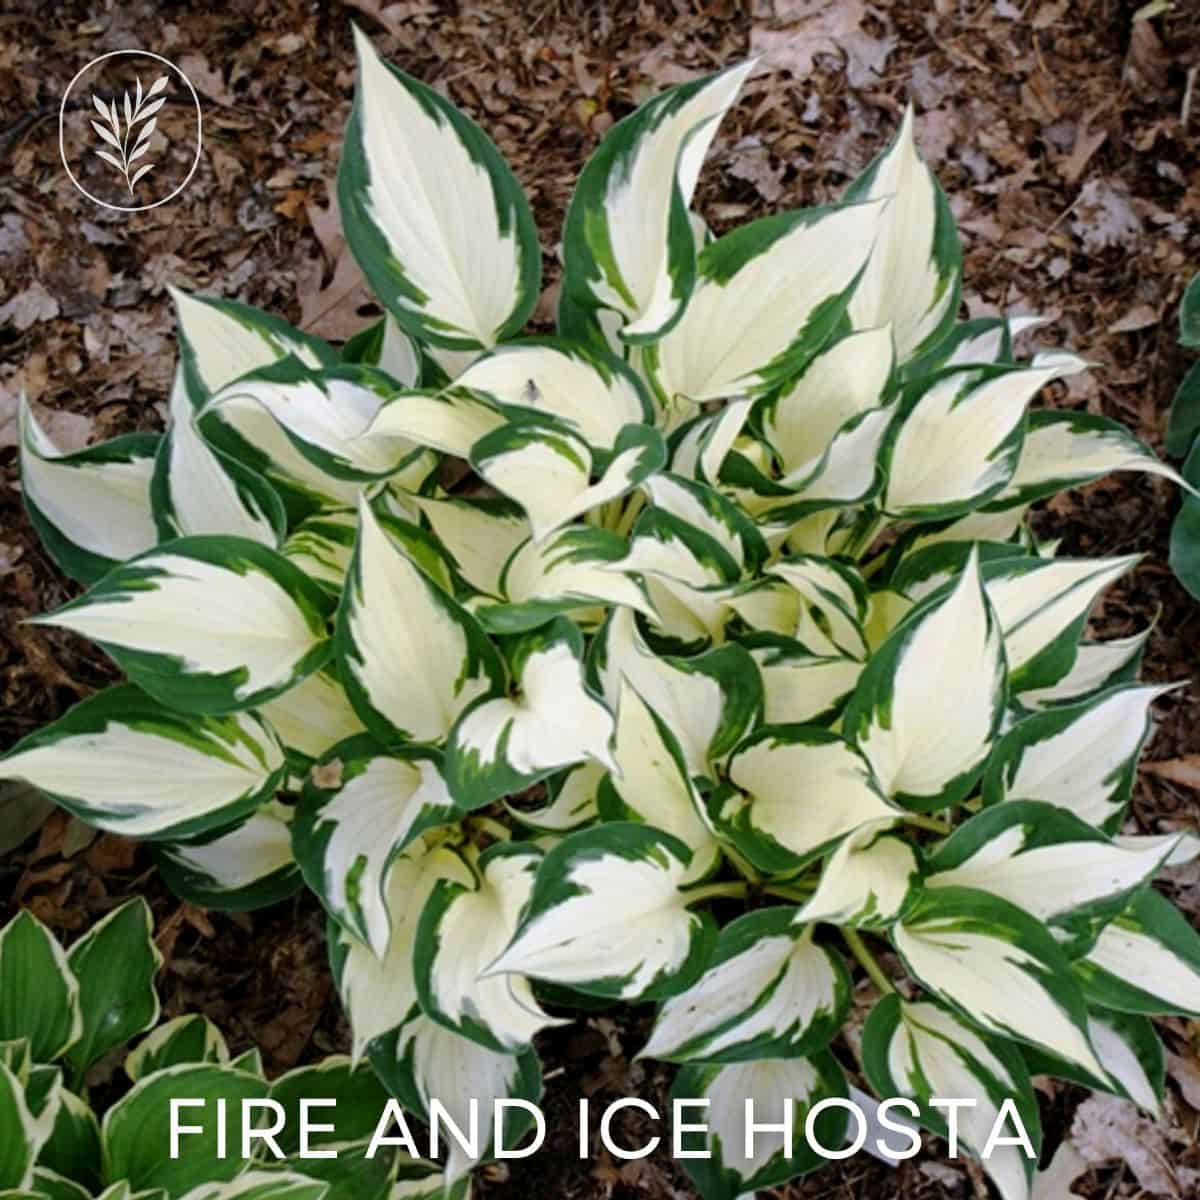 Fire and ice hosta via @home4theharvest